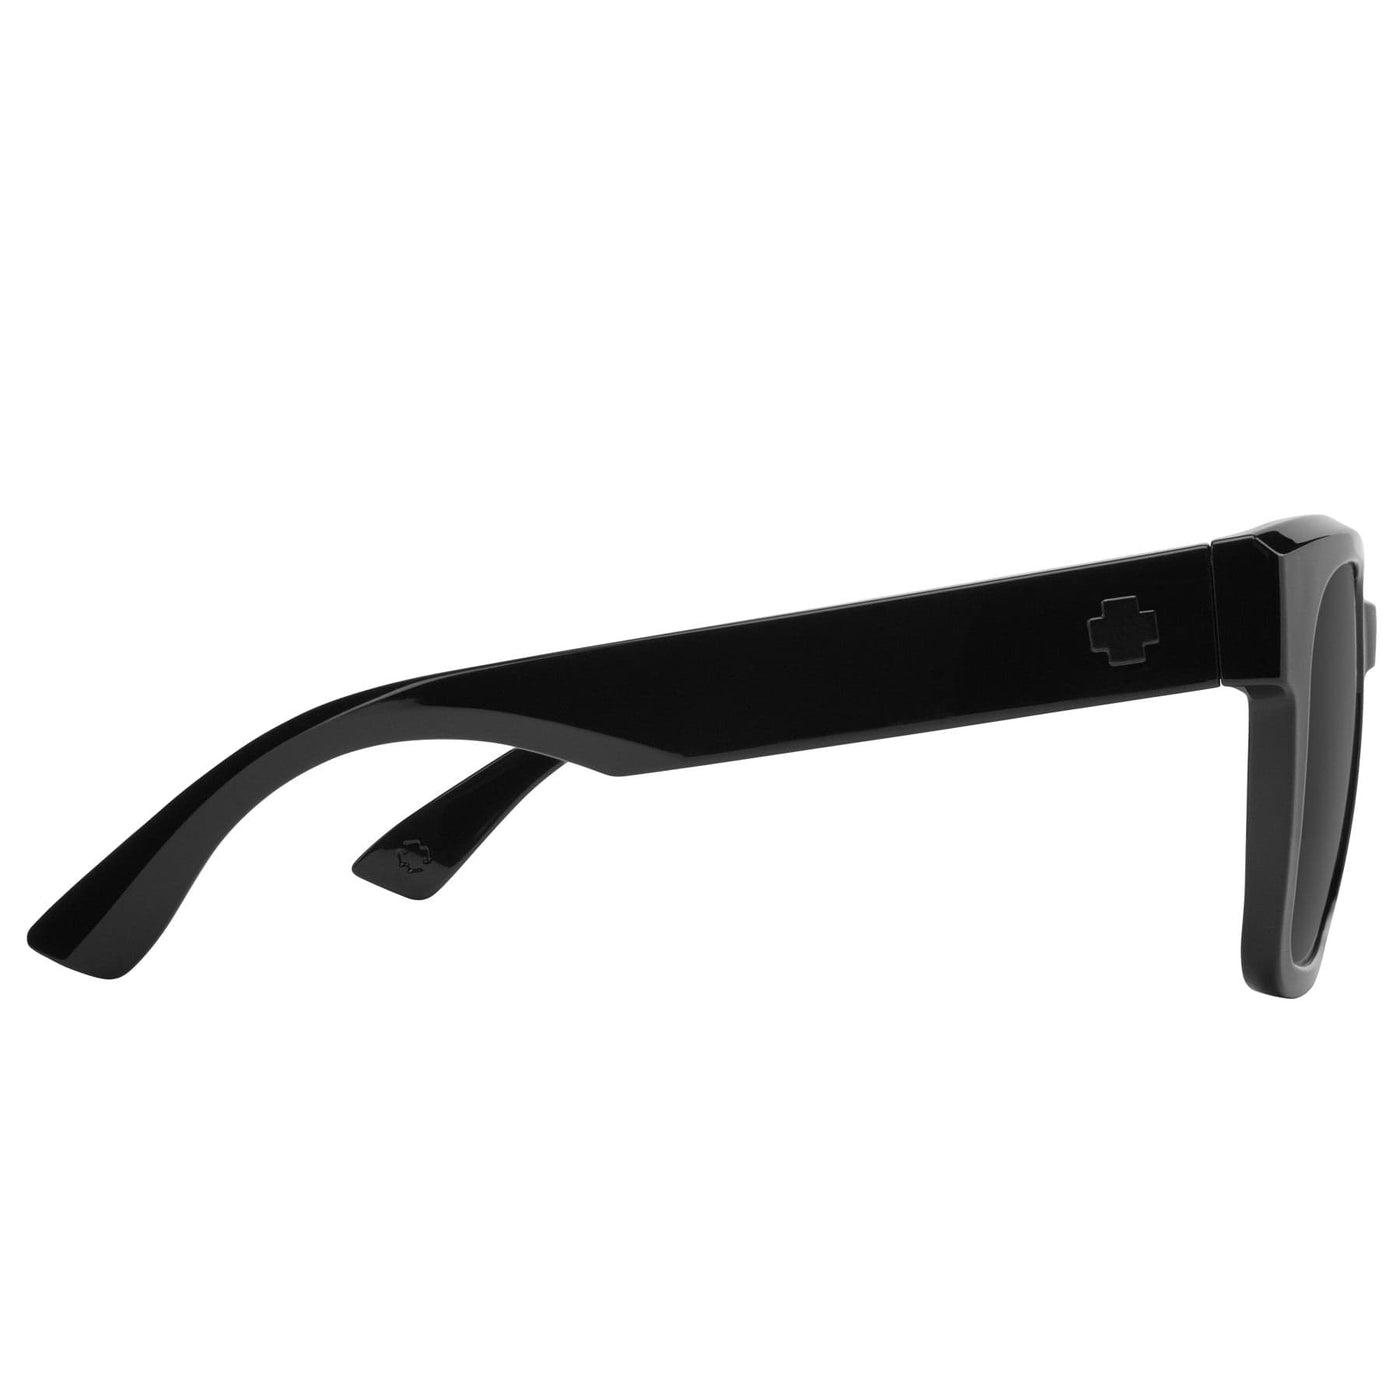 SPY DESSA Polarized Sunglasses, Happy Lens - Gray 8Lines Shop - Fast Shipping